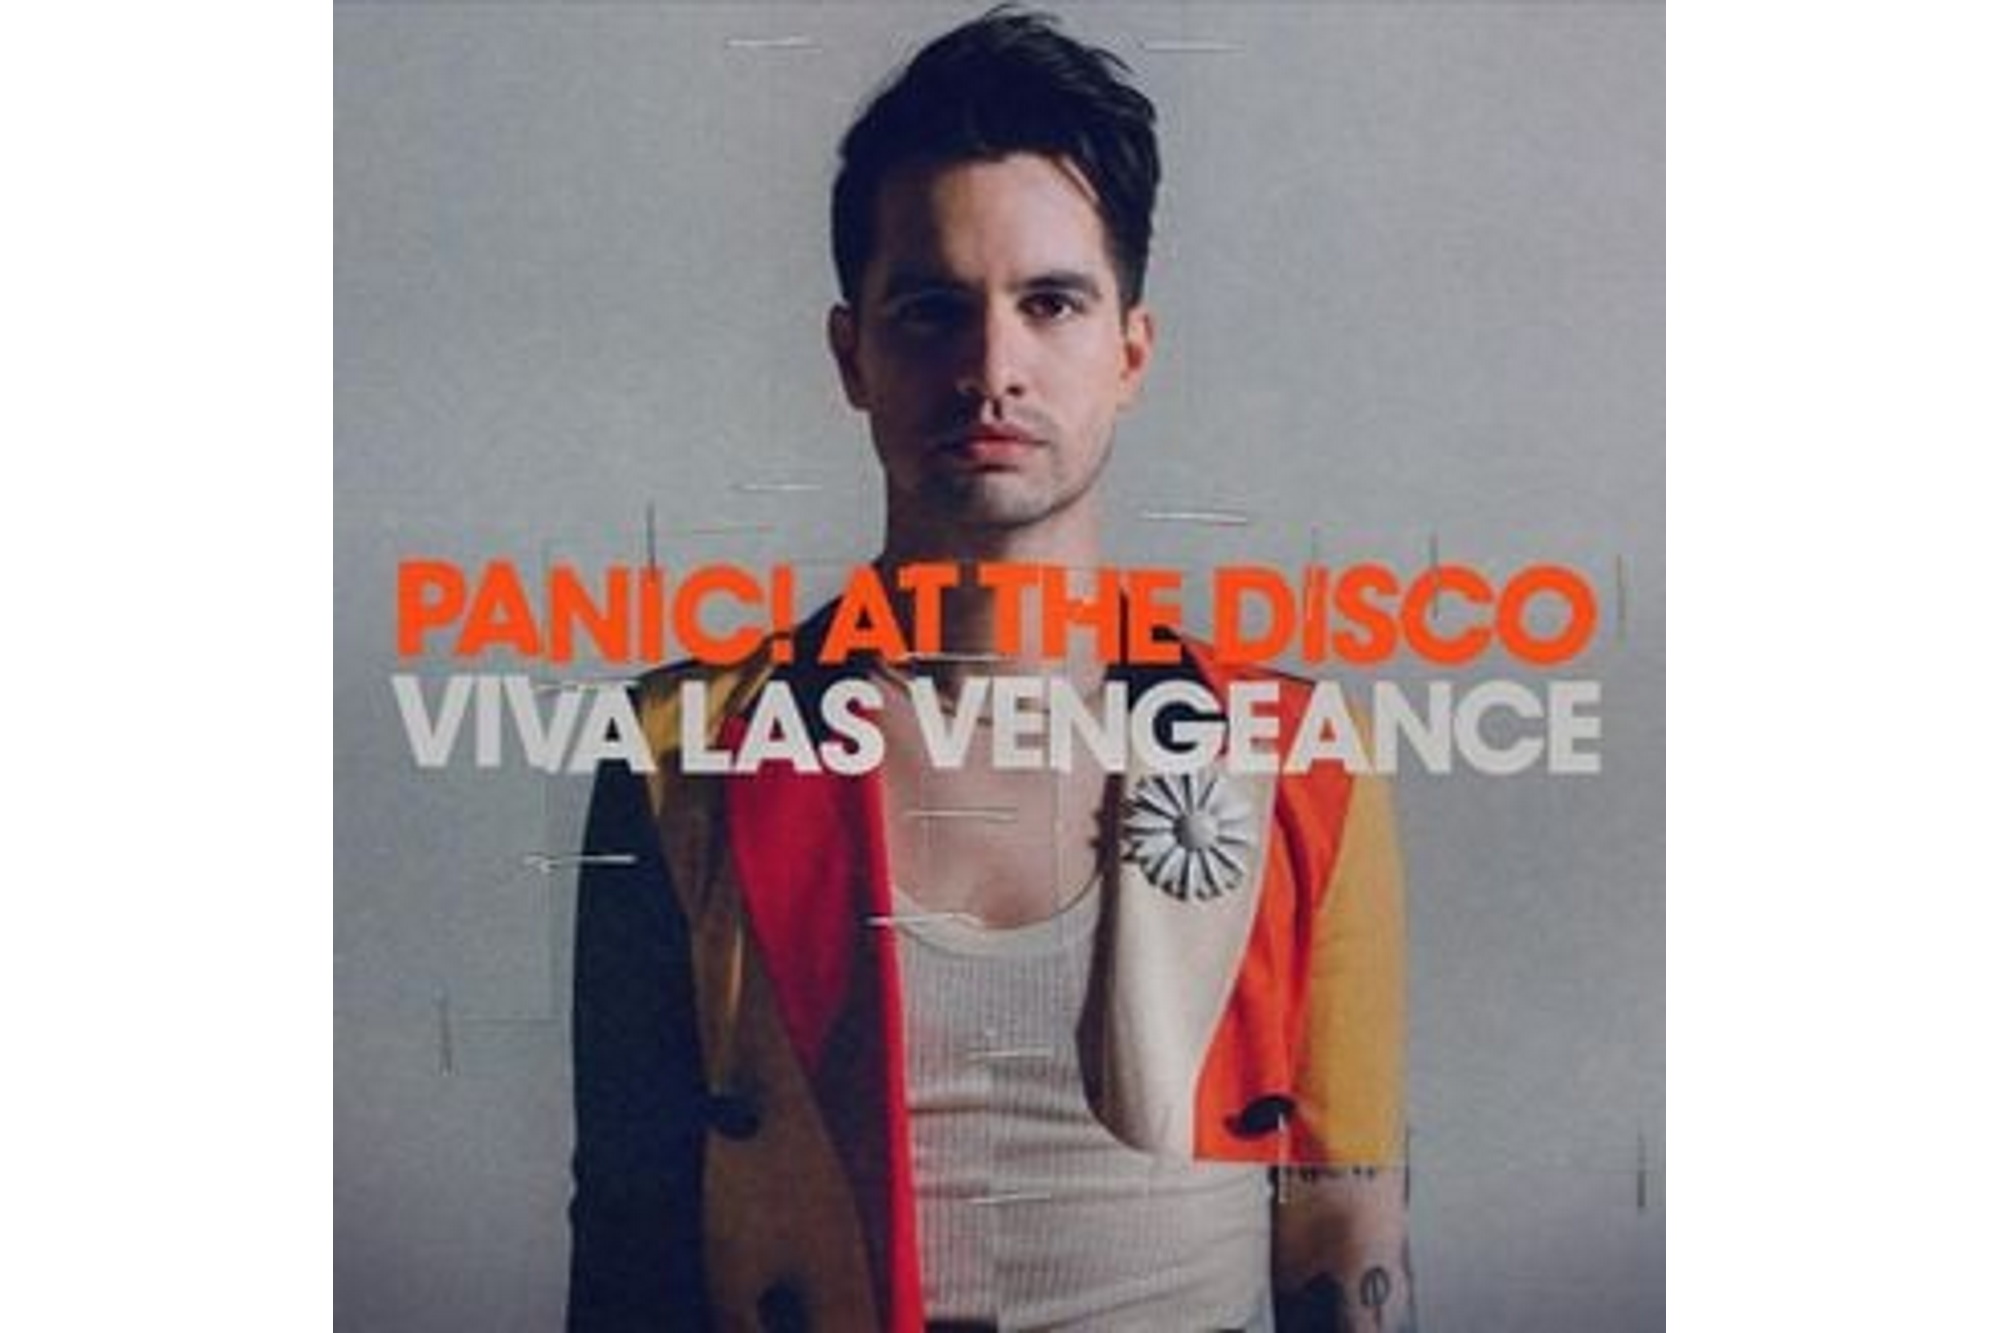 Viva Las Vegeance - Panic! At The Disco